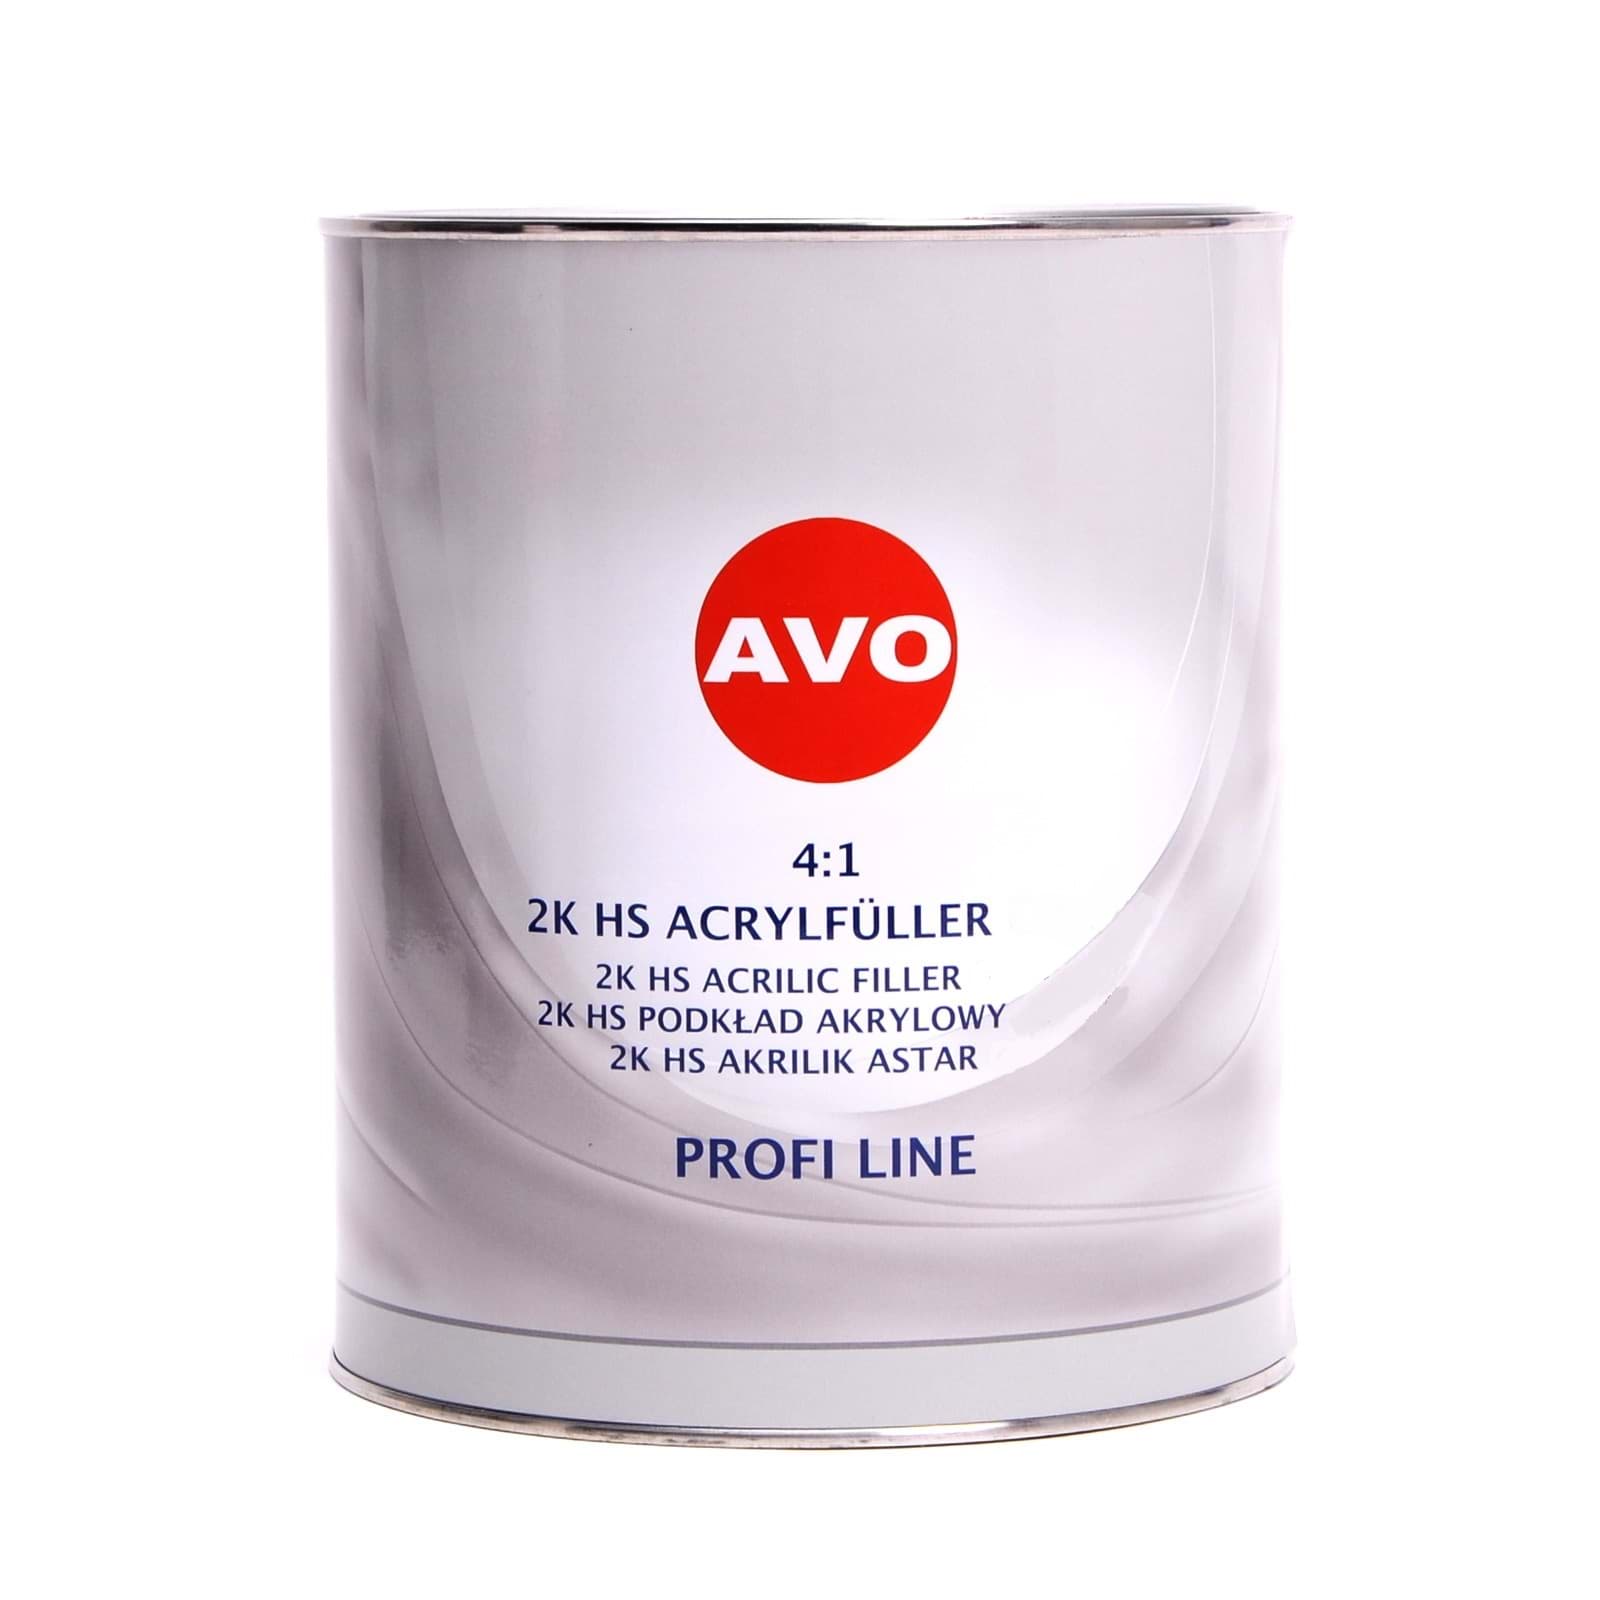 Afbeelding van AVO 2K HS 4:1 Grundier Füller  Acrylfiller weiss 4 Liter